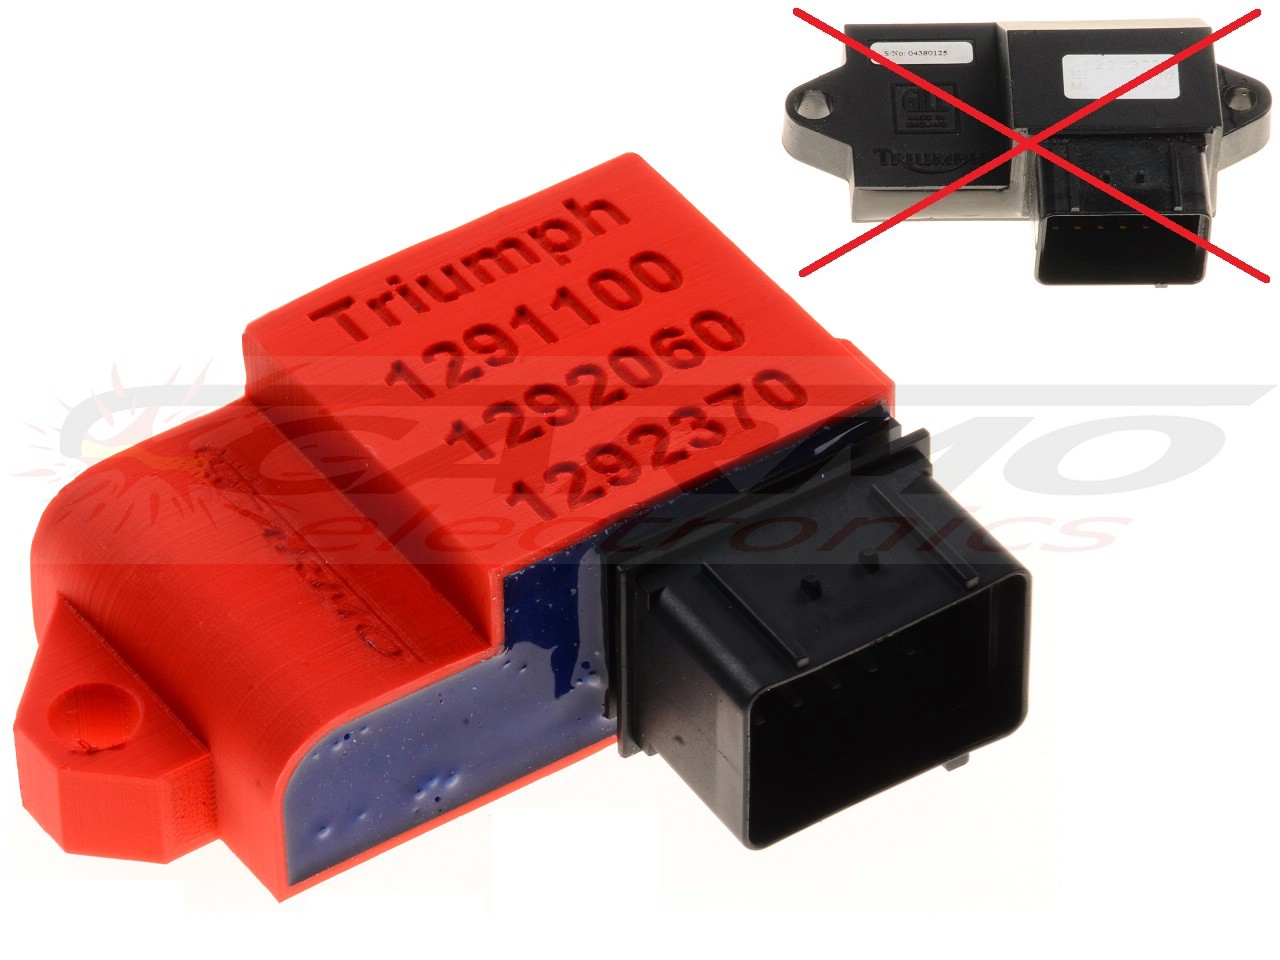 Triumph Scrambler (1292960) igniter ignition module CDI TCI Box - Clique na Imagem para Fechar